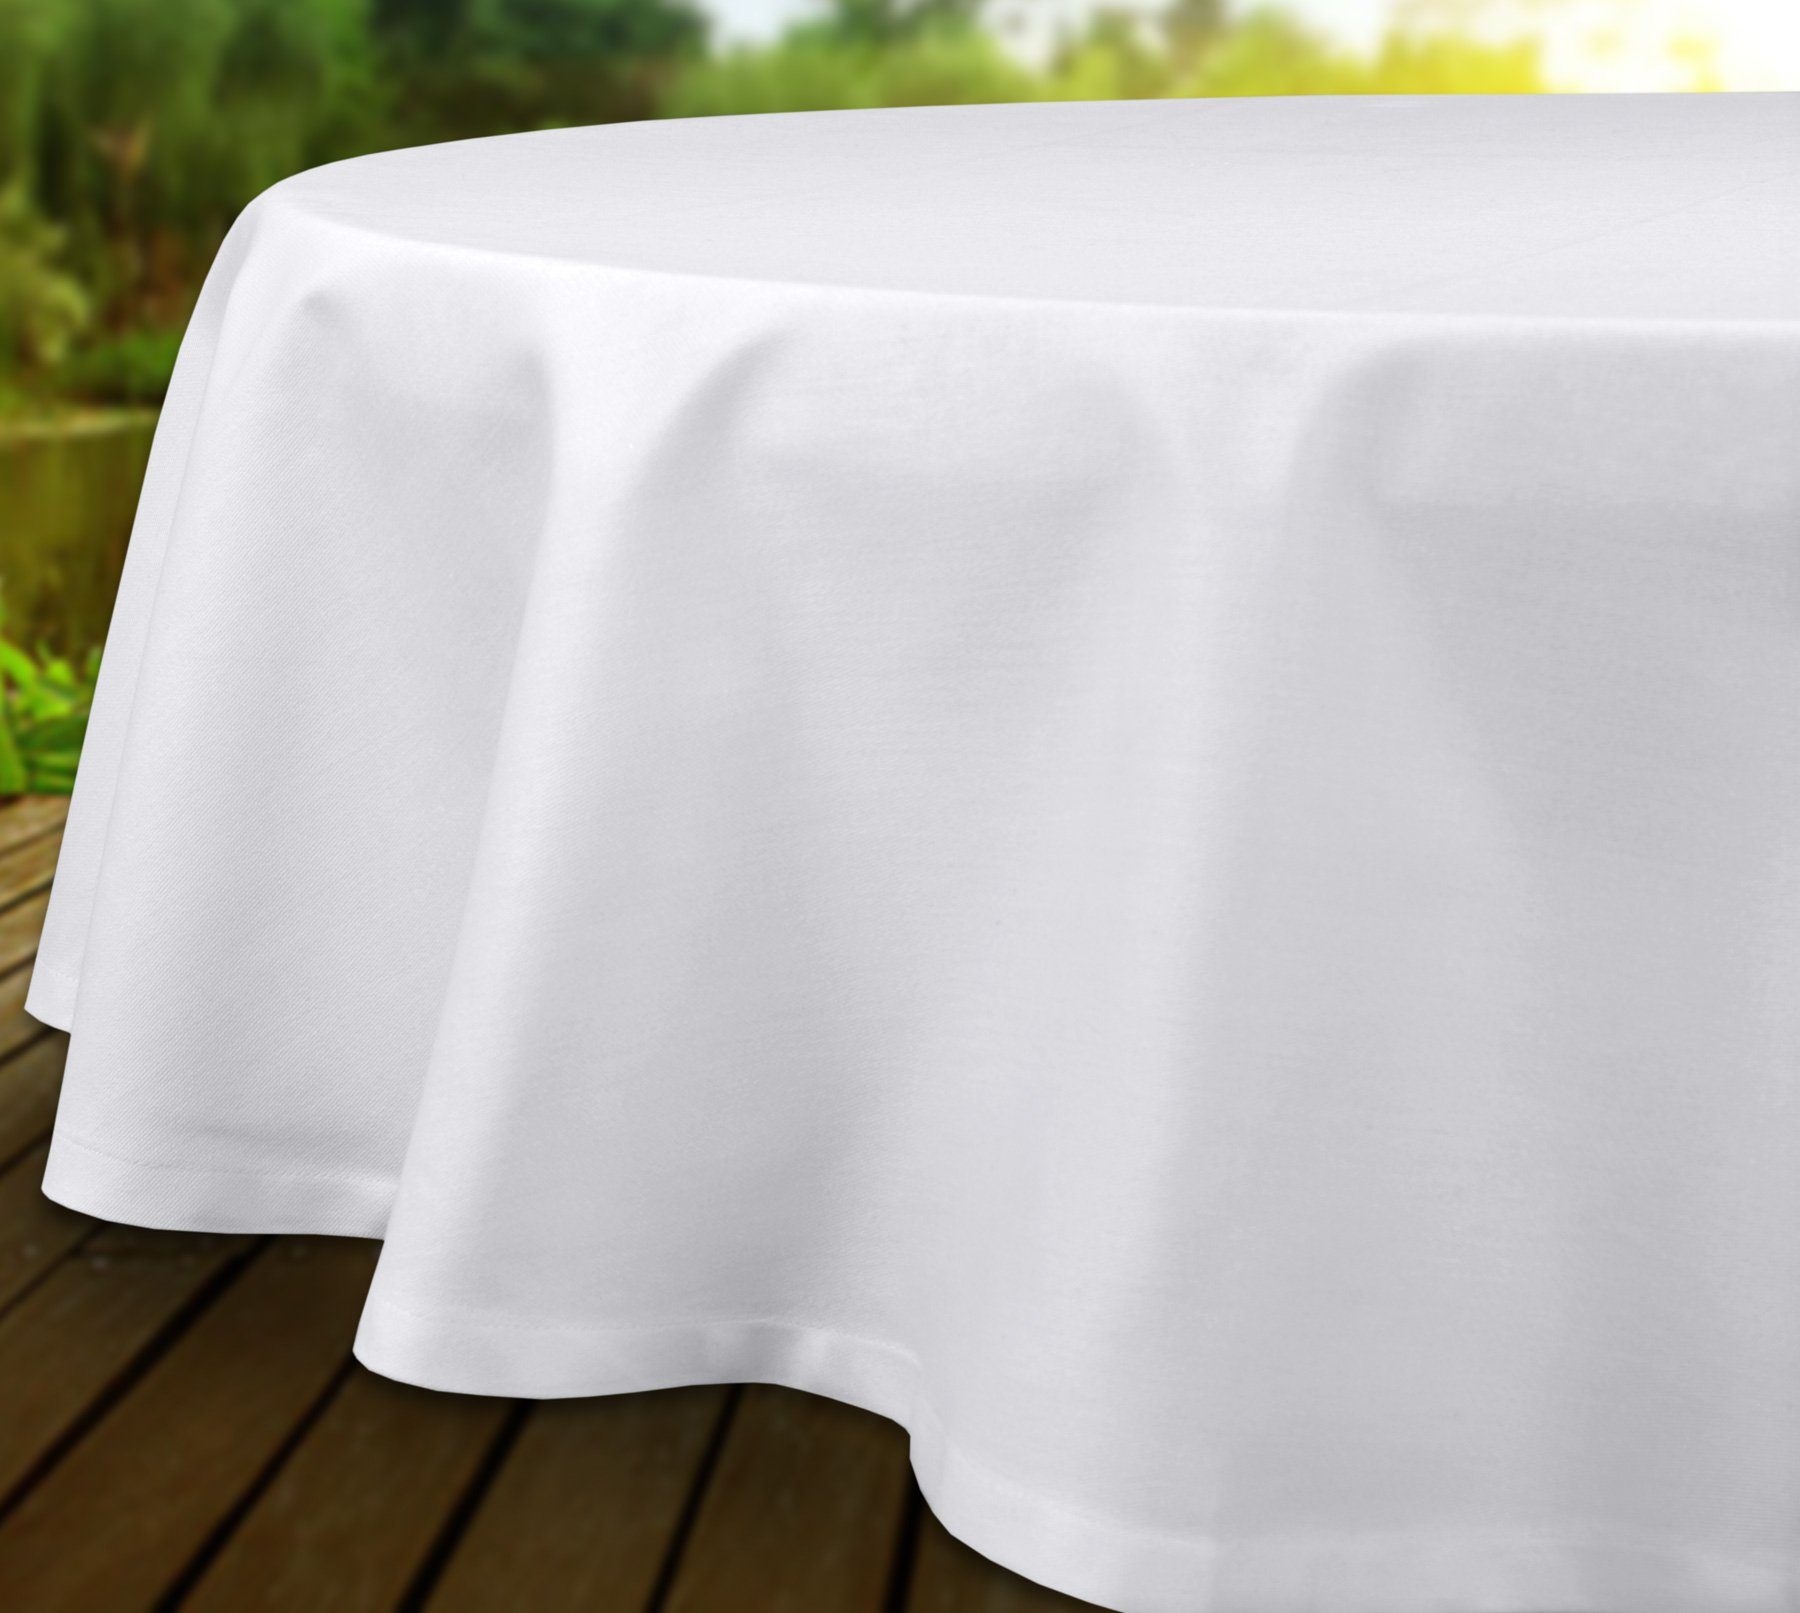 2x Tafeltuch Tischdecke  Tablecloth Baumwolle 130x170 cm   weiß glatt   NEU 